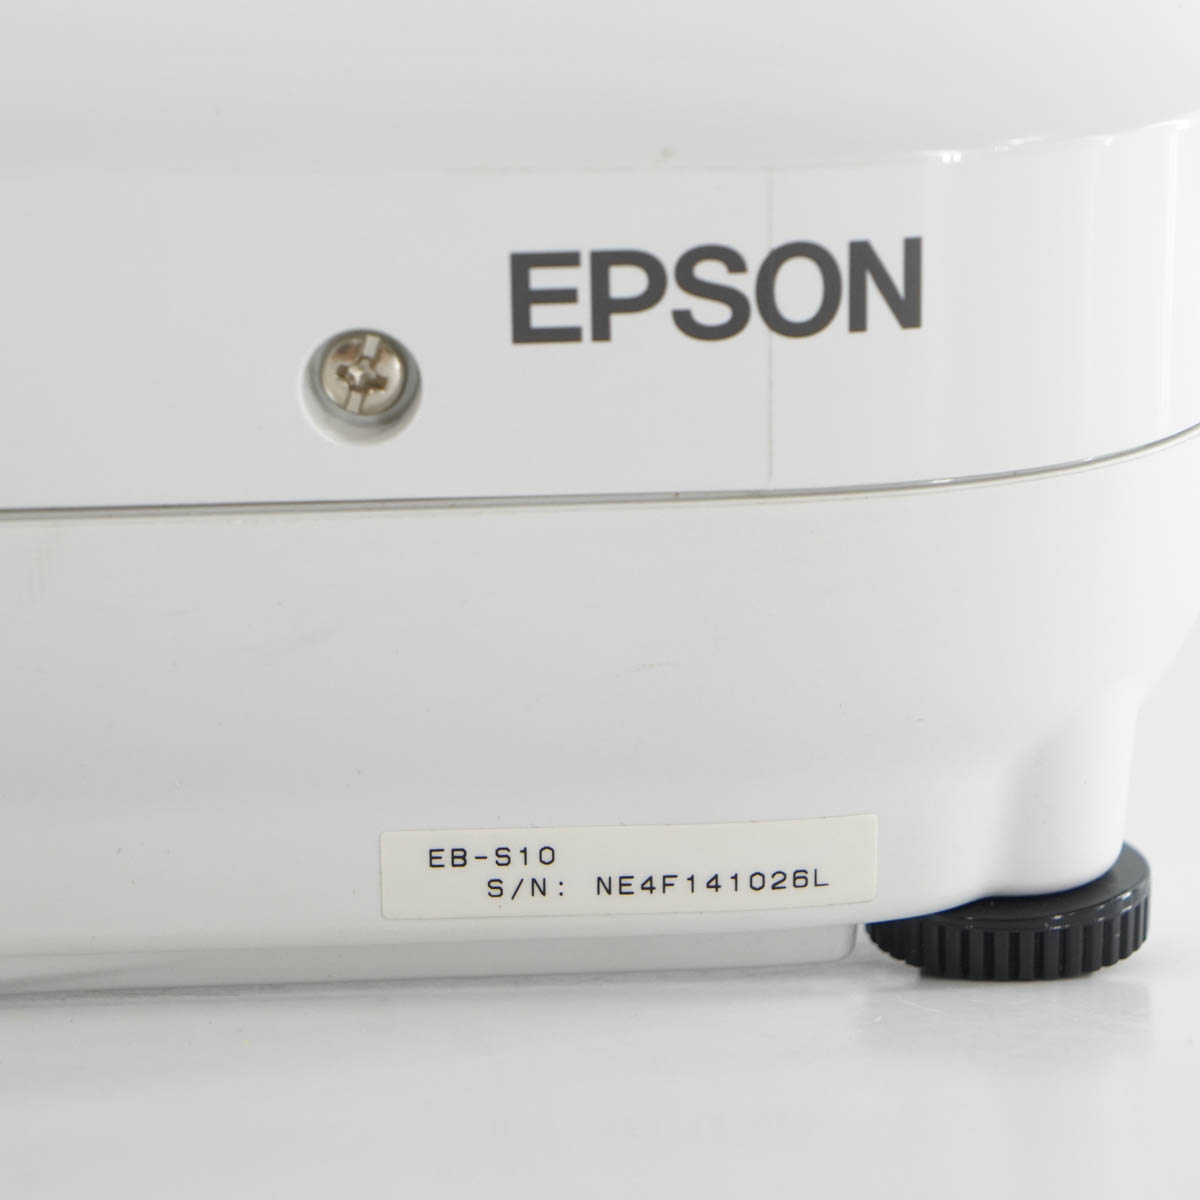 PG]USED 8日保証 ランプ244時間 EPSON EB-S10 H369D プロジェクター